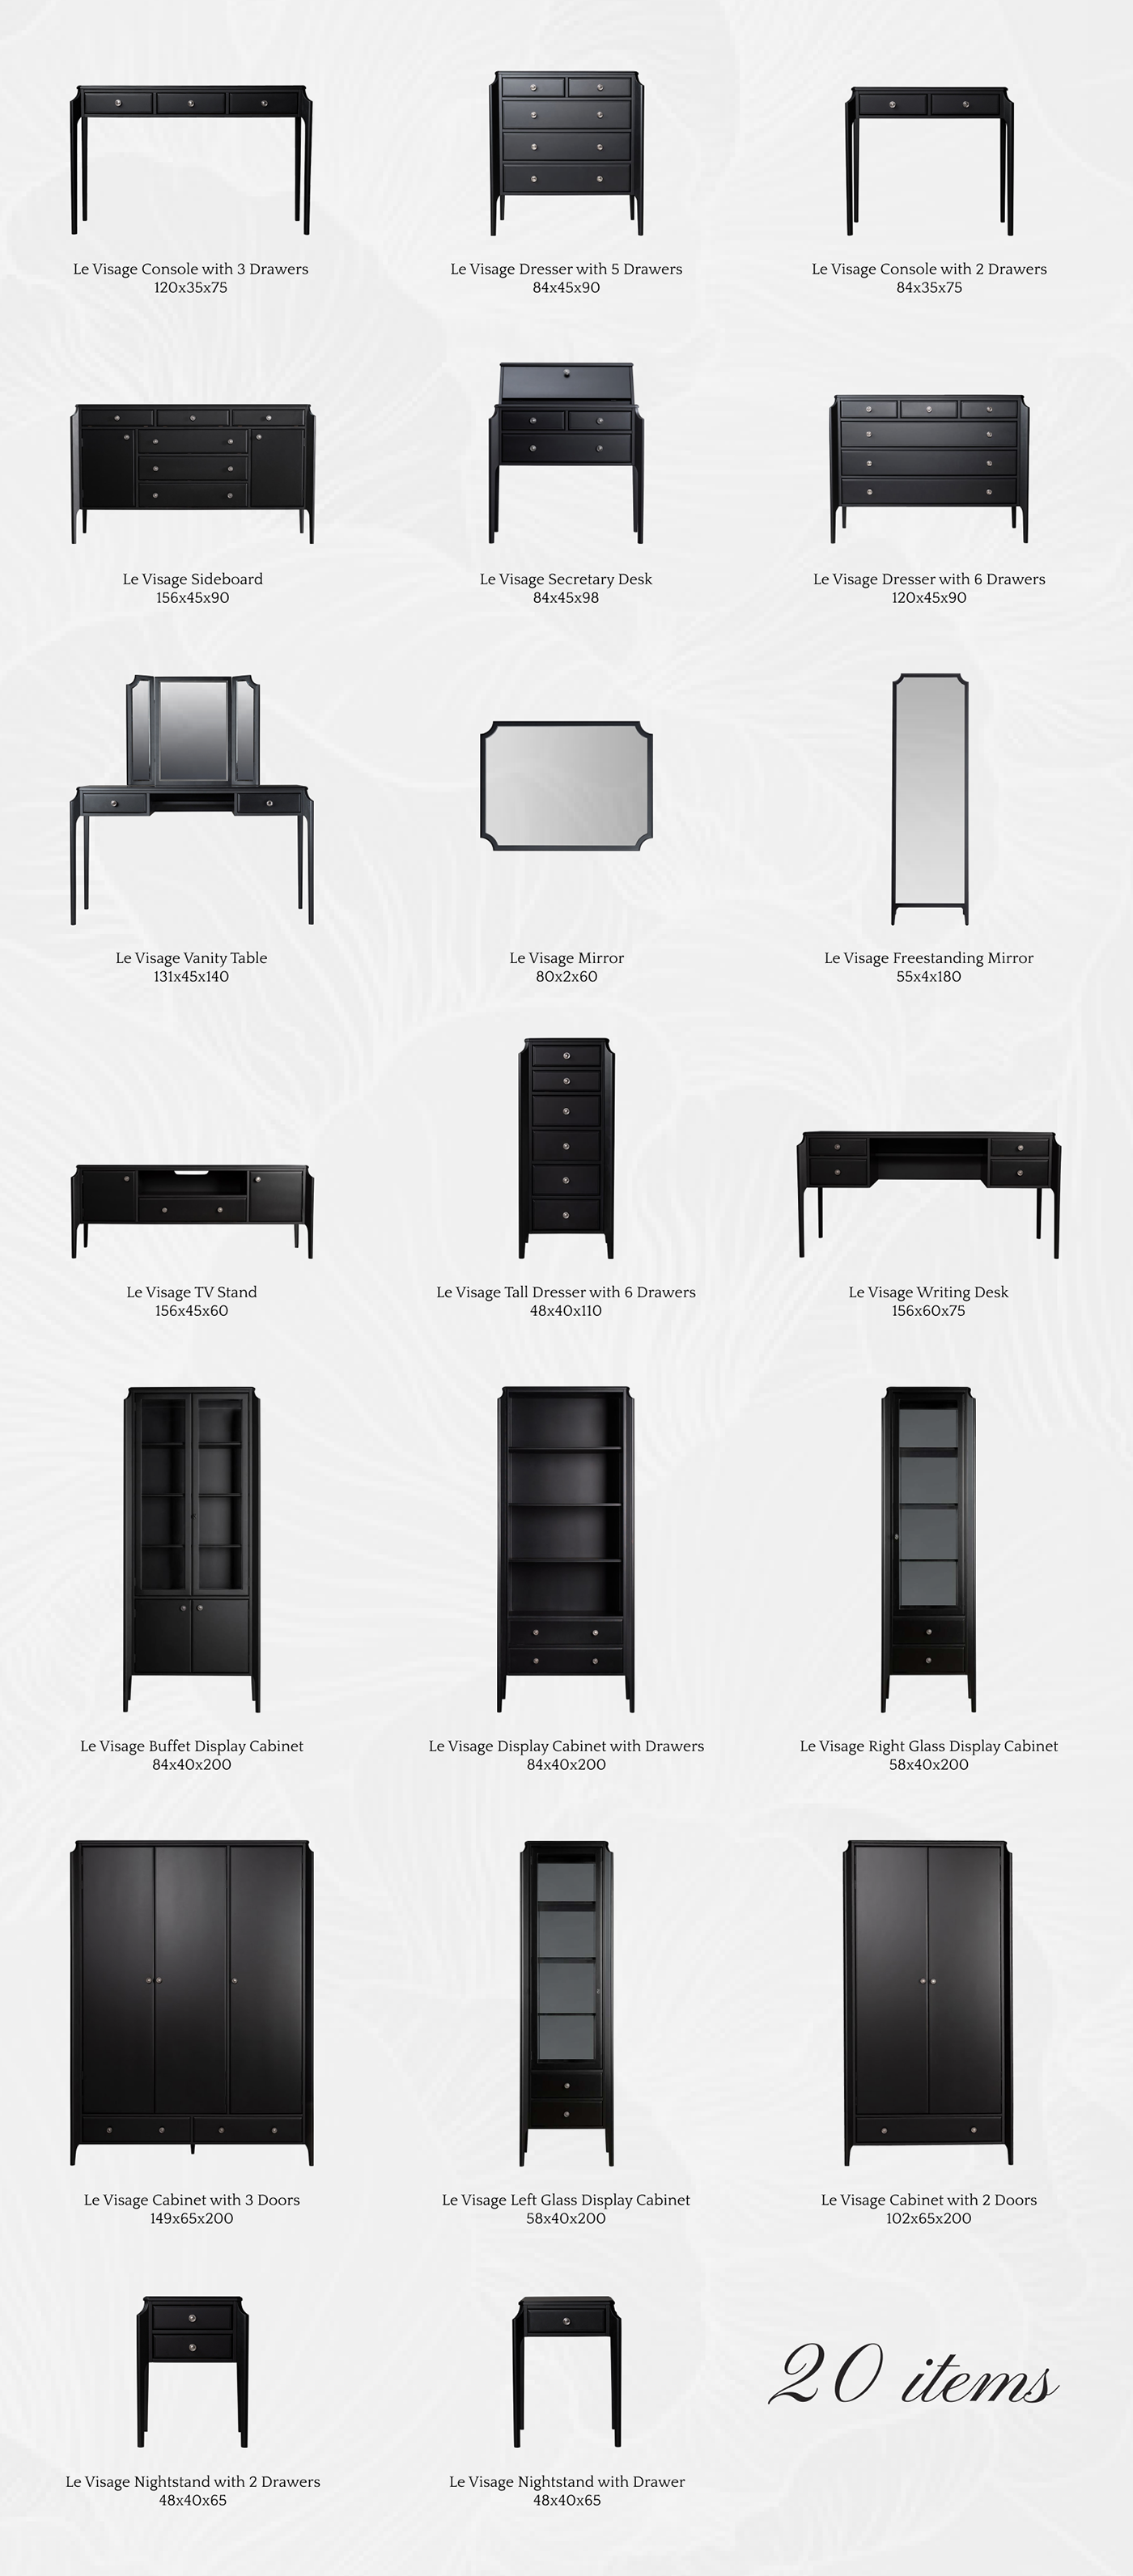 furnituredesign interiordesign bedsidetabledesign consoledesign Design2024 designprojects dresserdesign economicallybeneficial Furniturecollection LeVisage